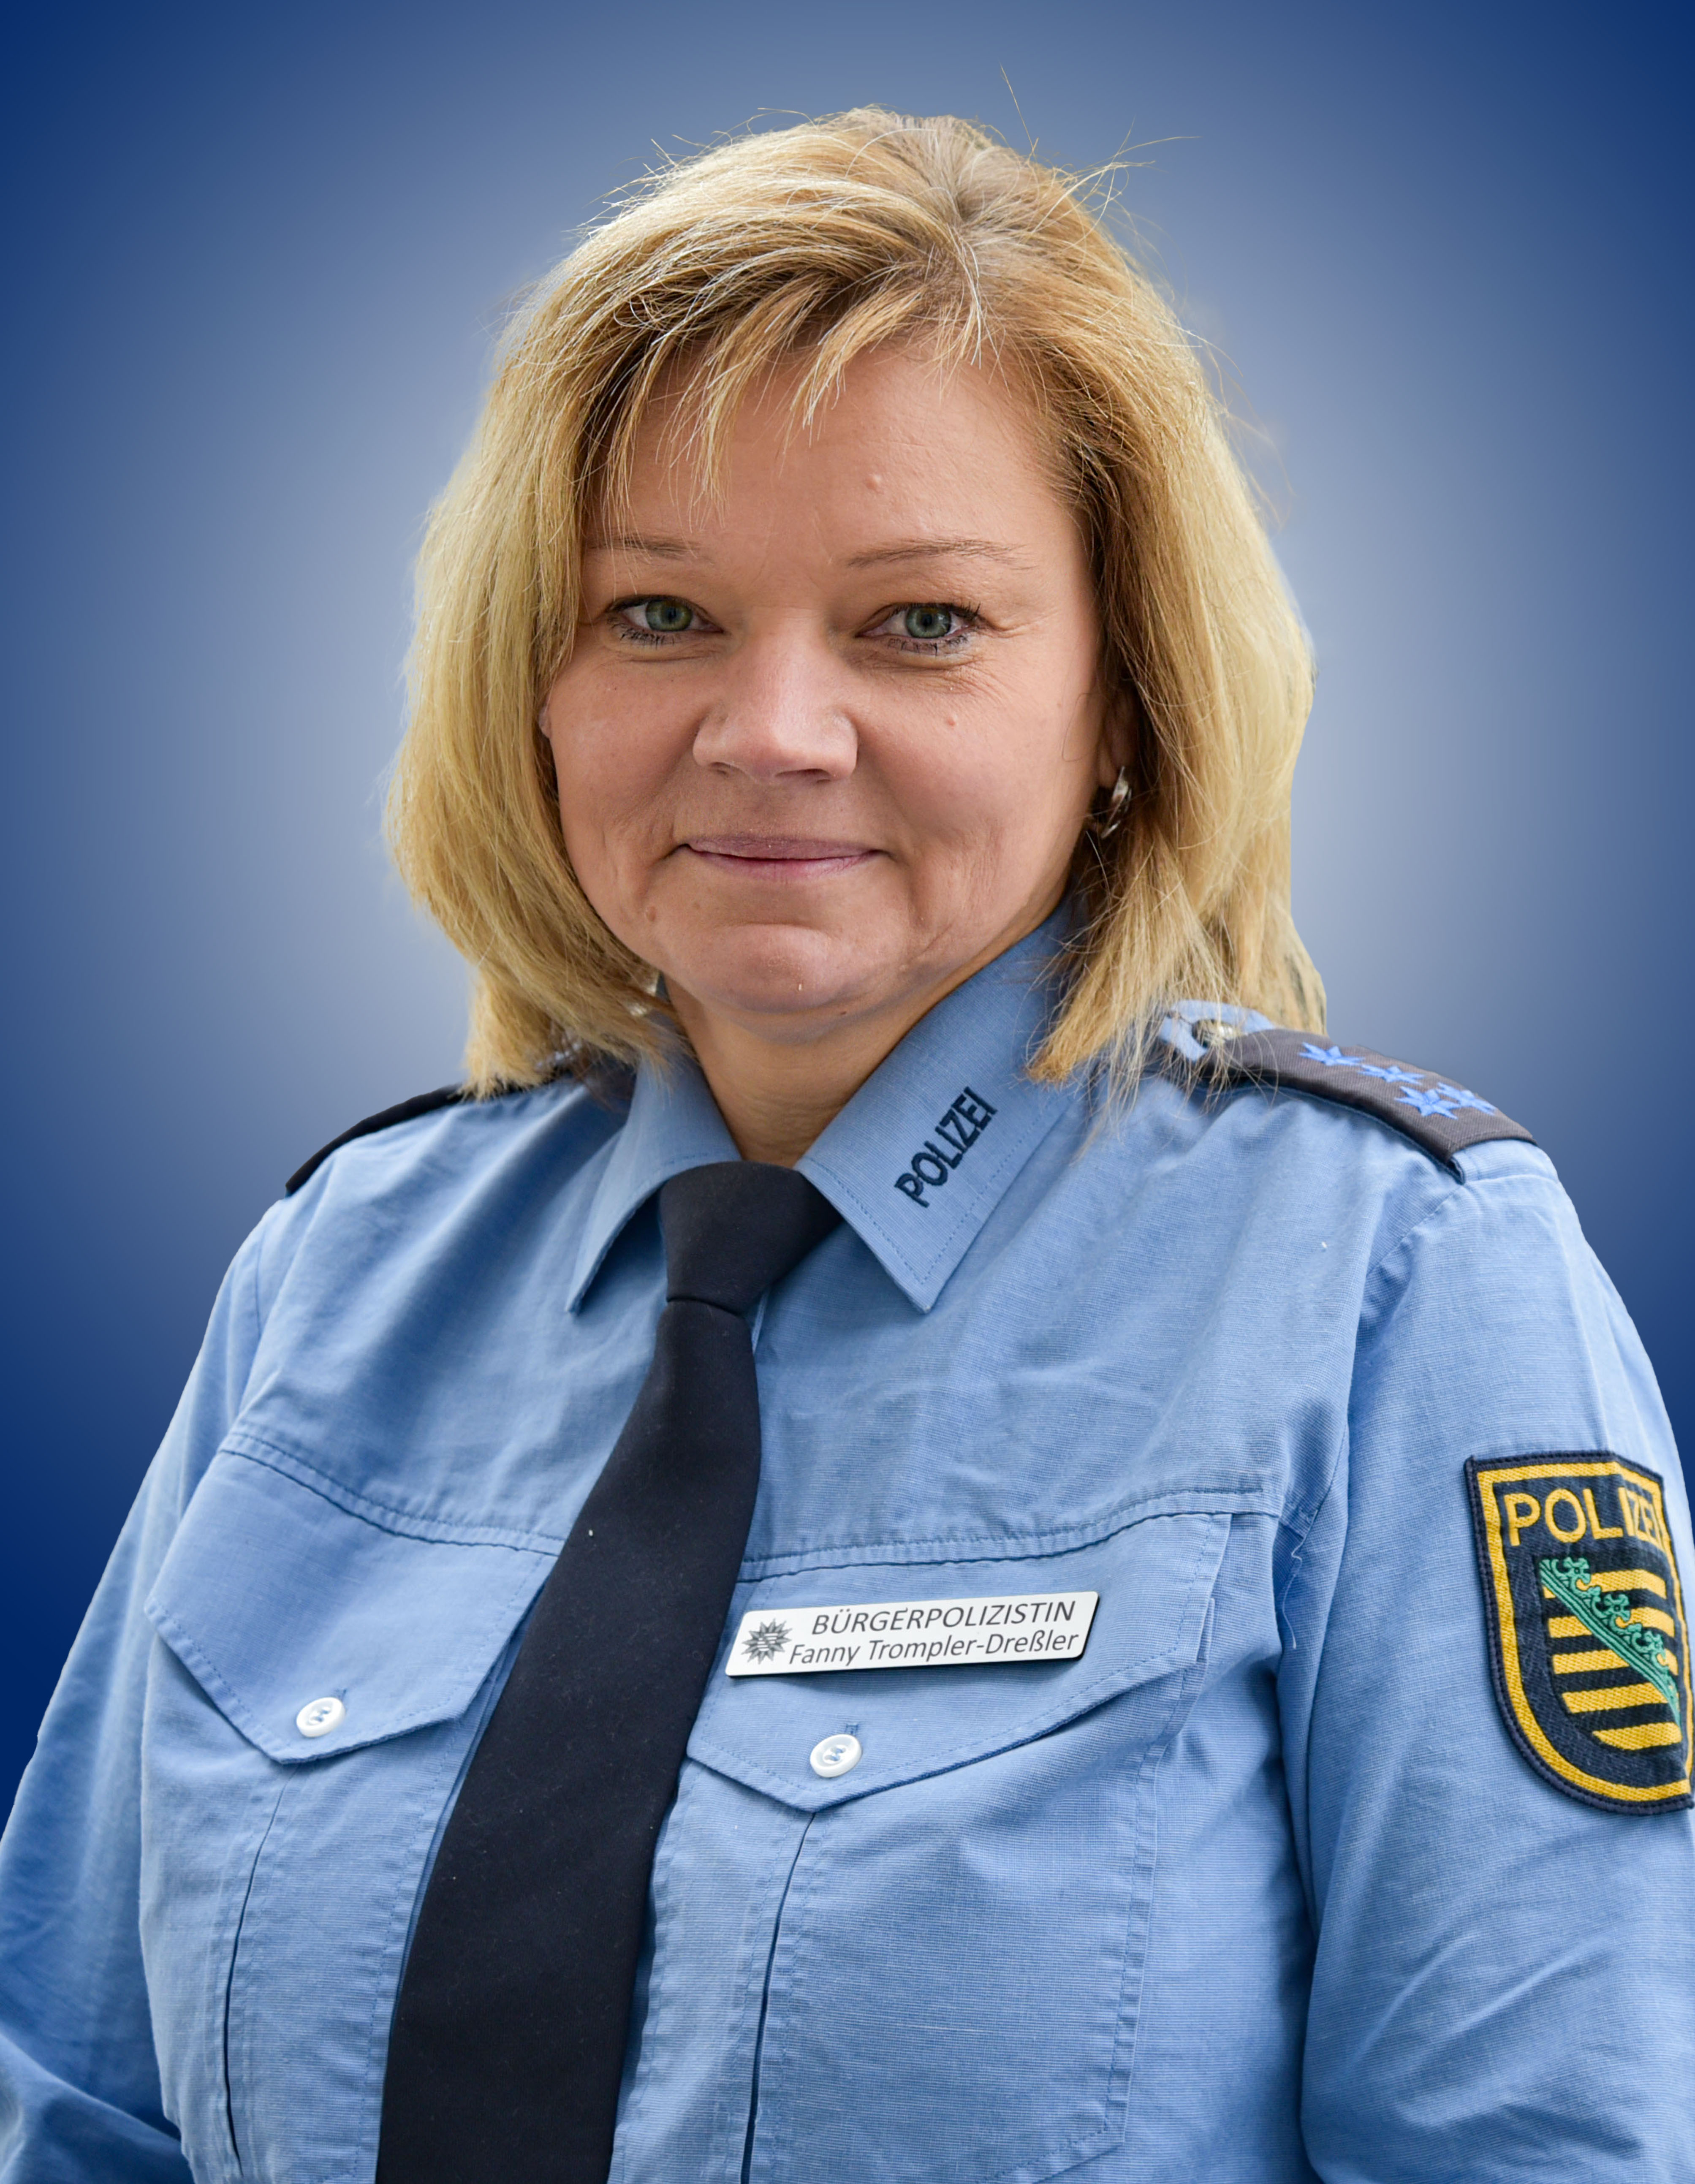 Polizeihauptmeisterin Fanny Trompler-Dreßler